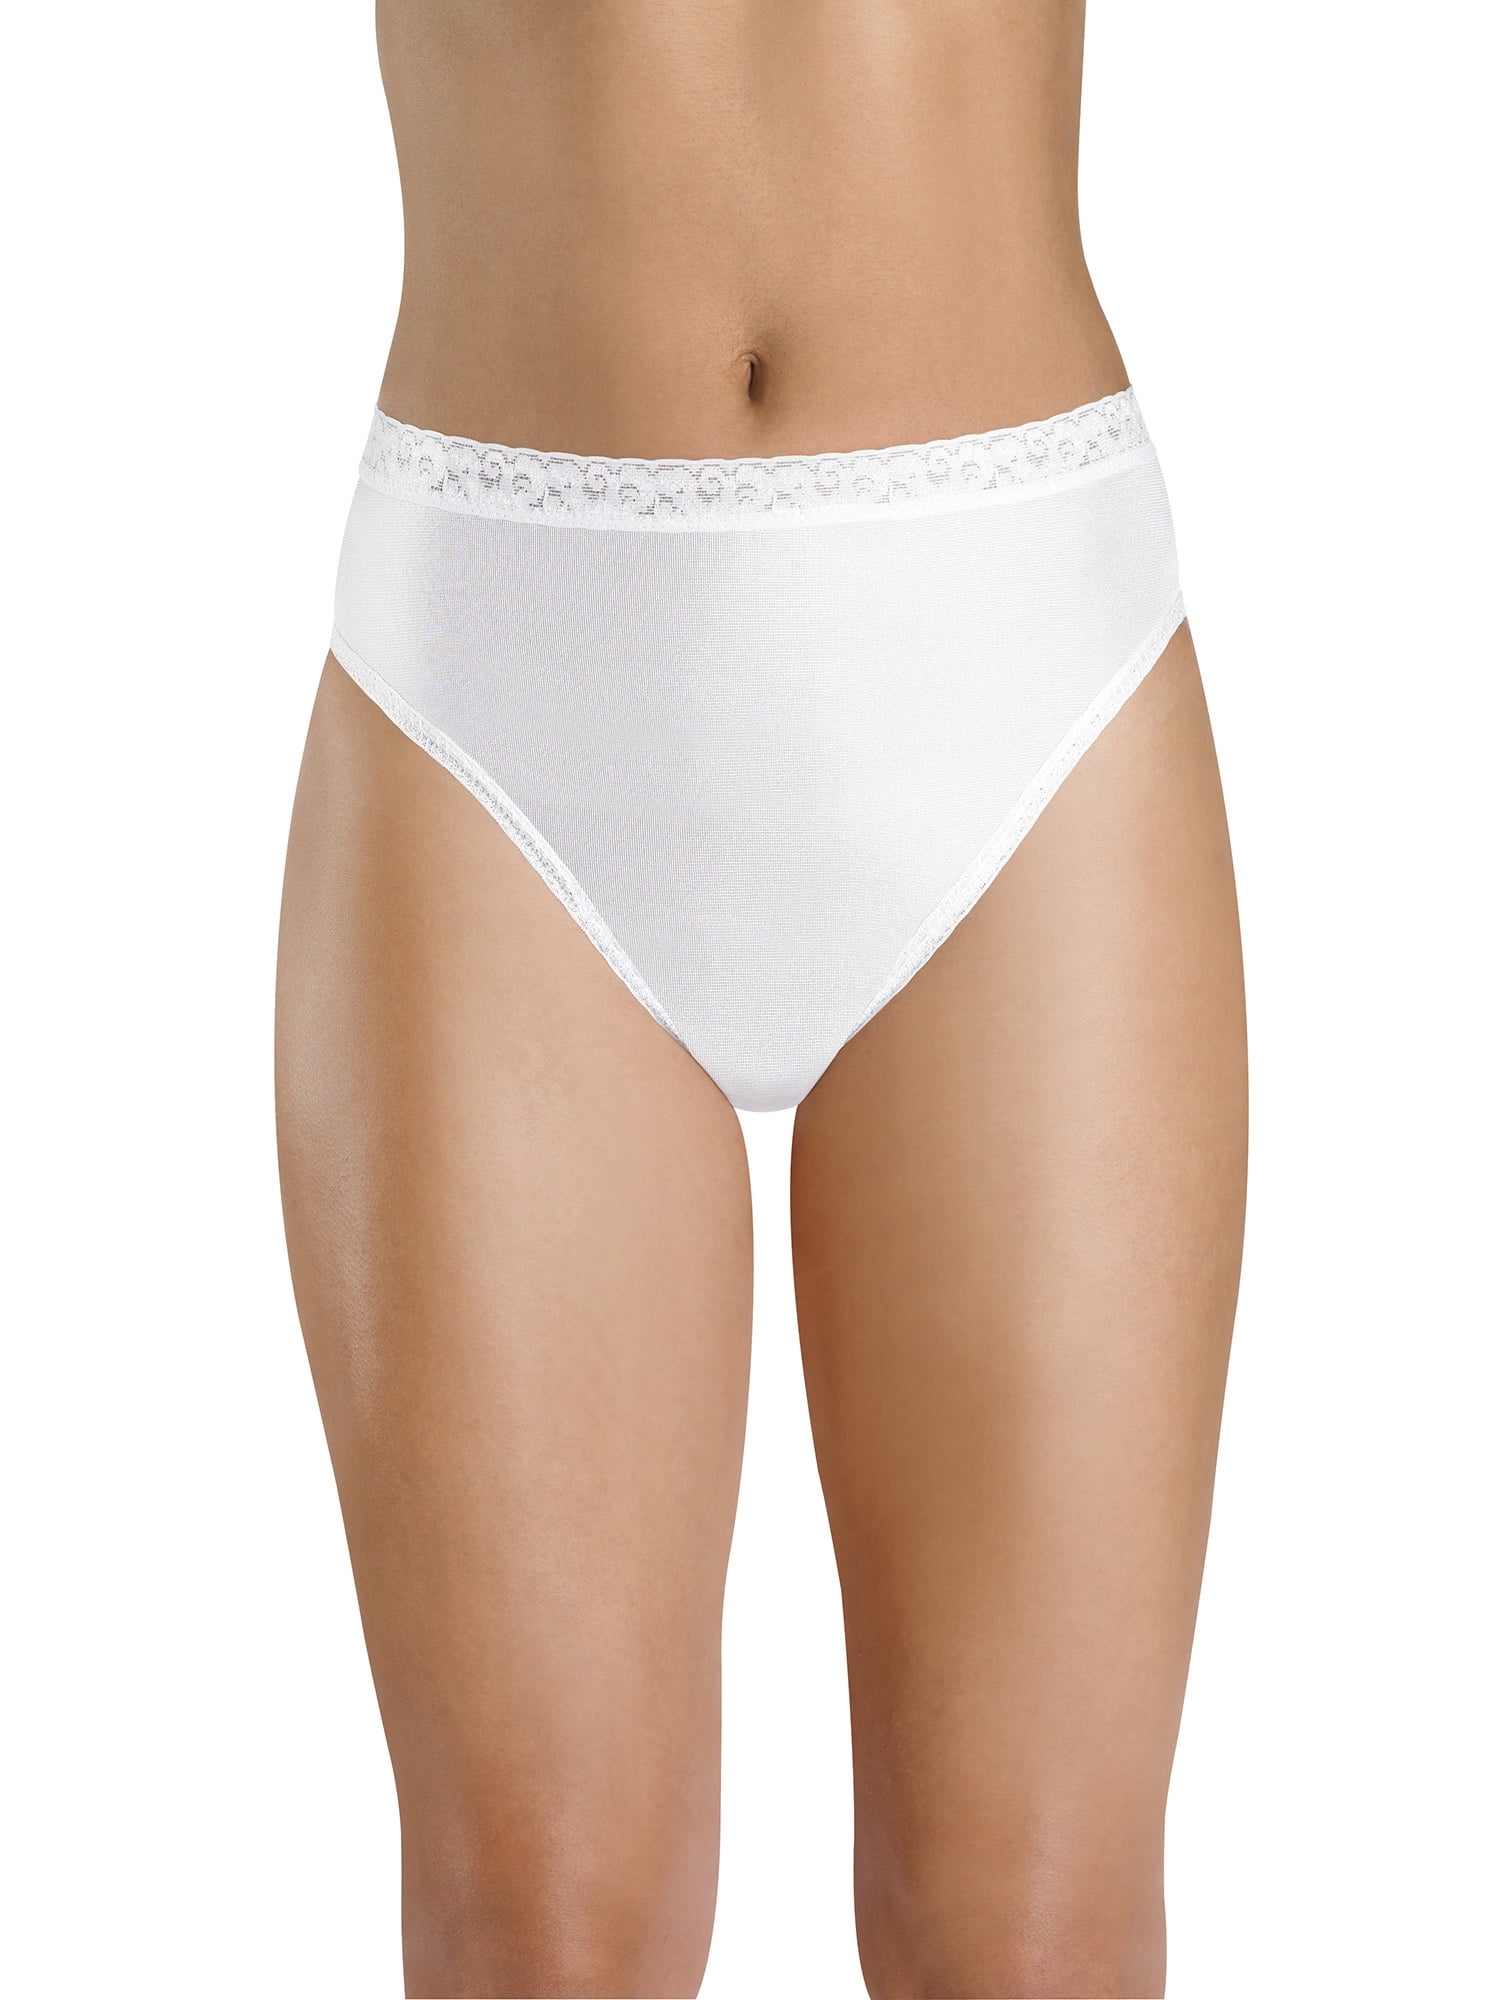 Hanes Women's nylon hi-cut panties - 6 pack